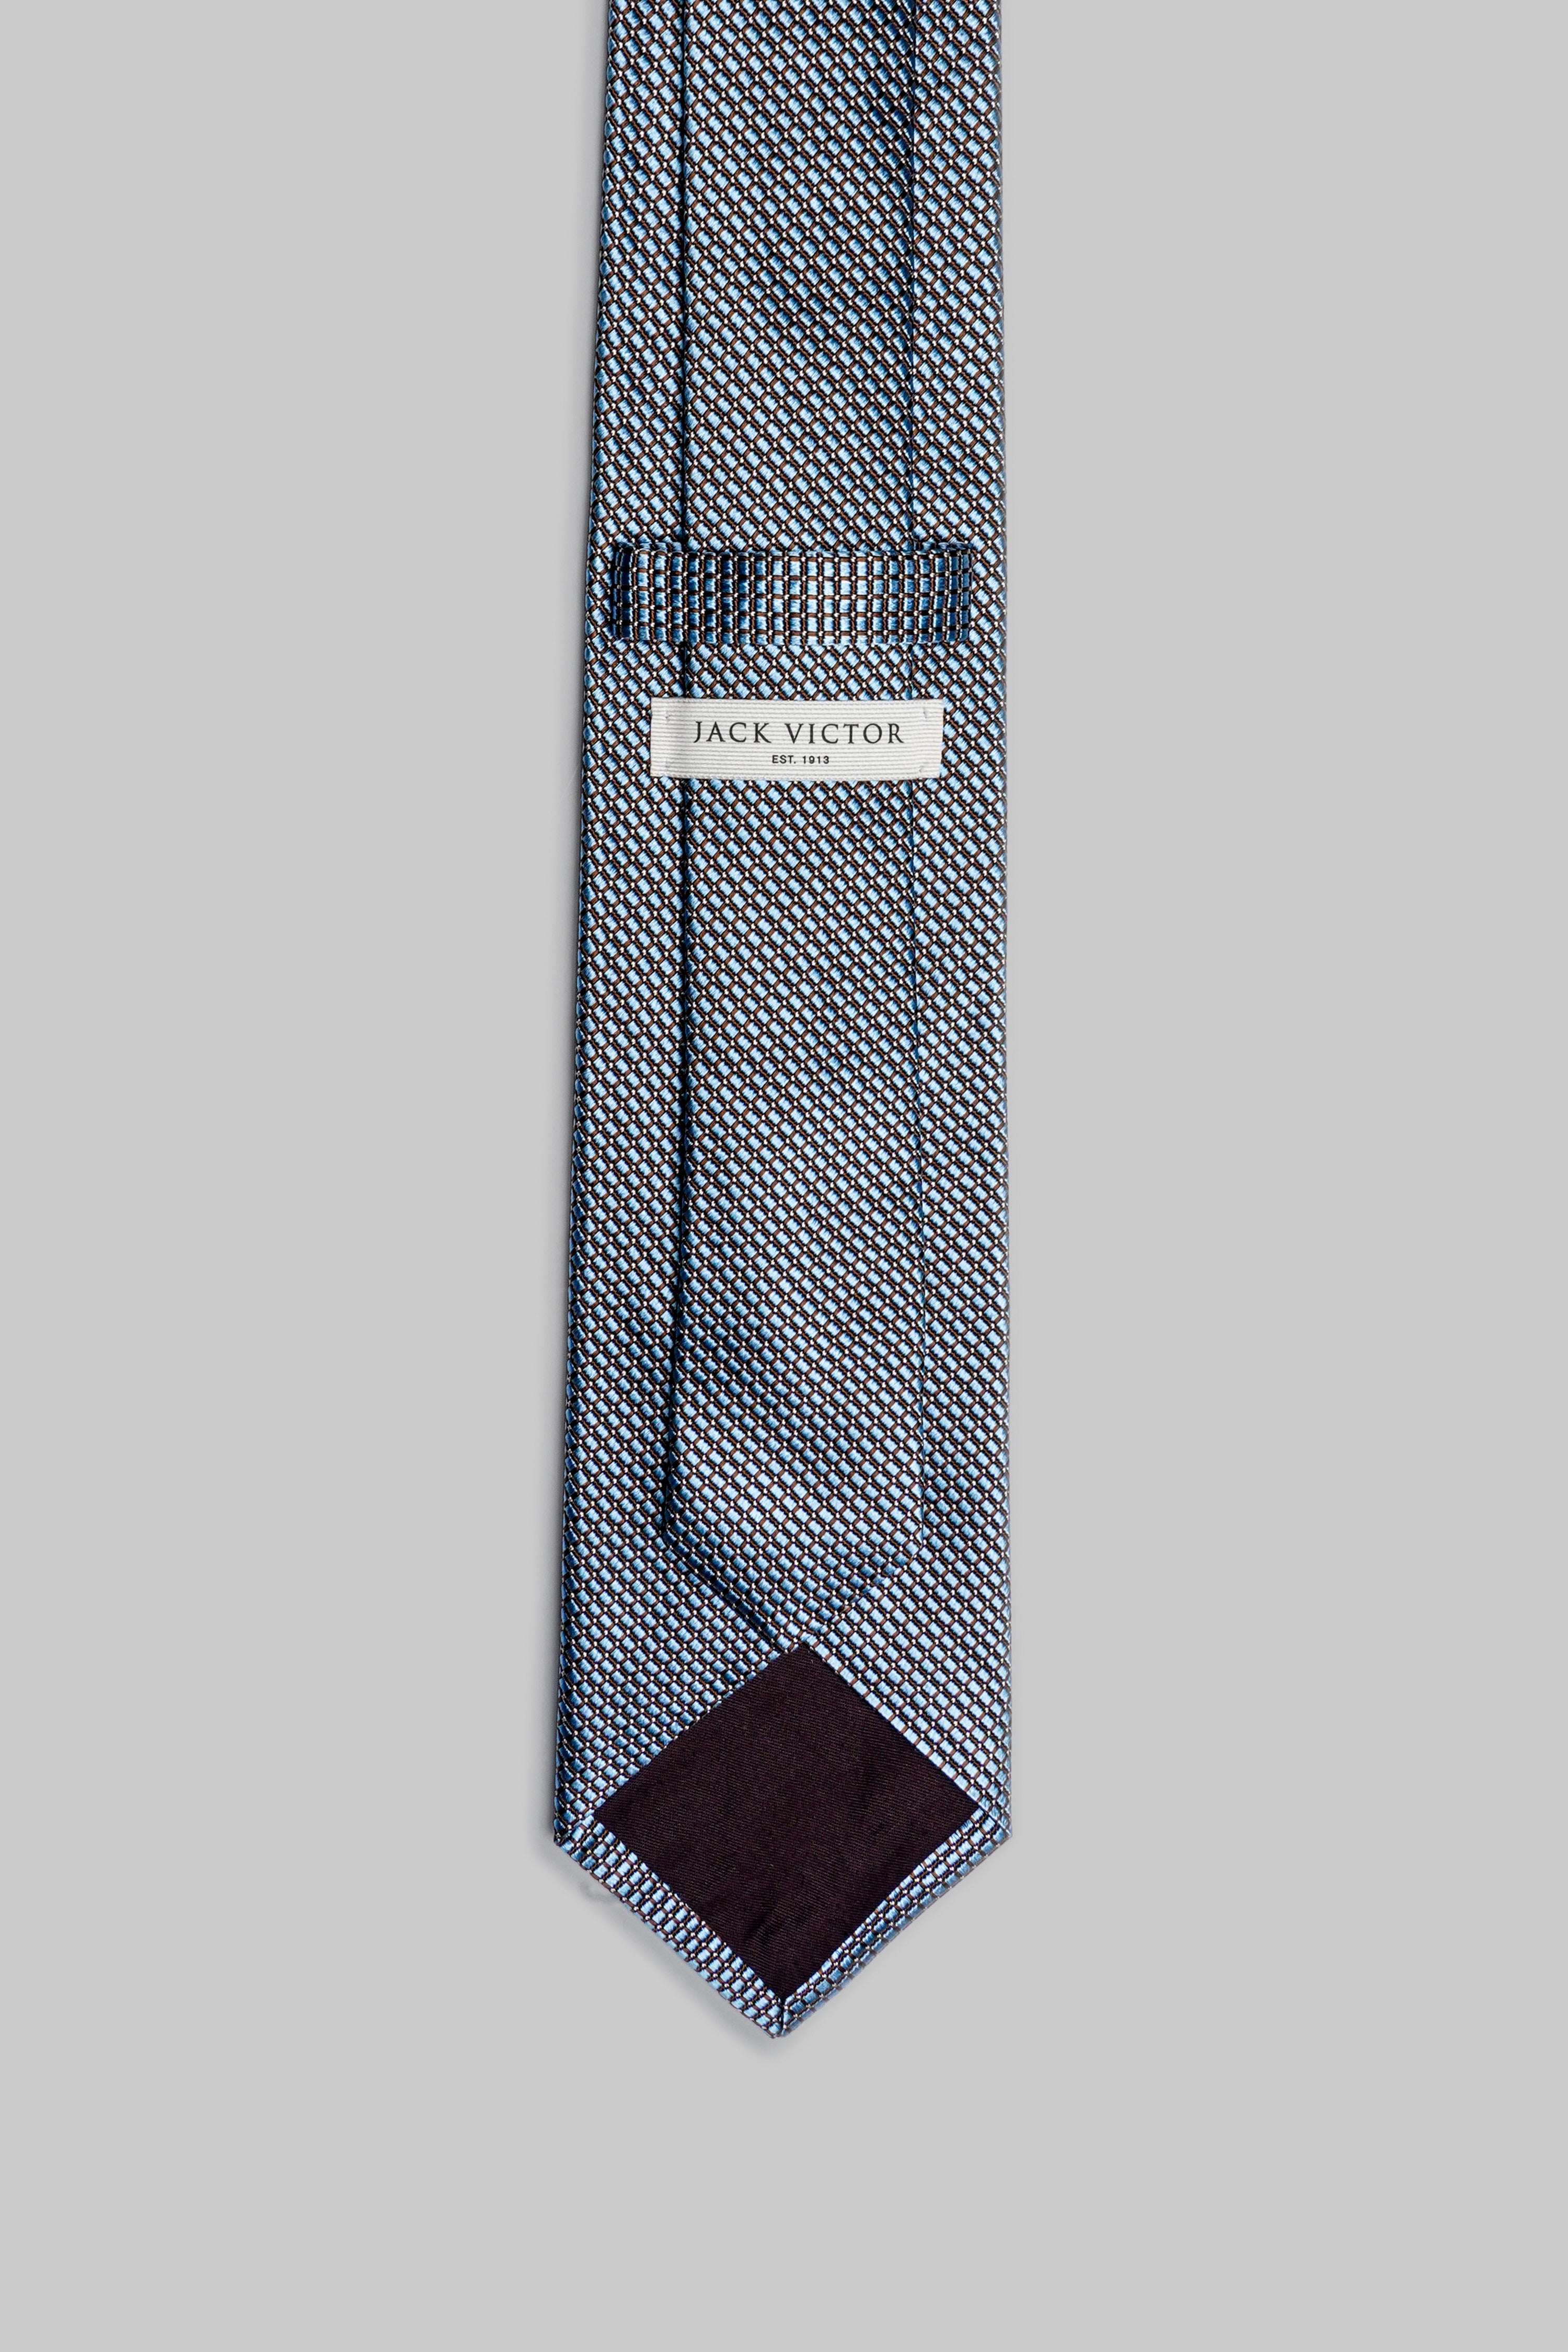 Vue alternative 2 Sherbrooke cravate en soie en bleu ciel